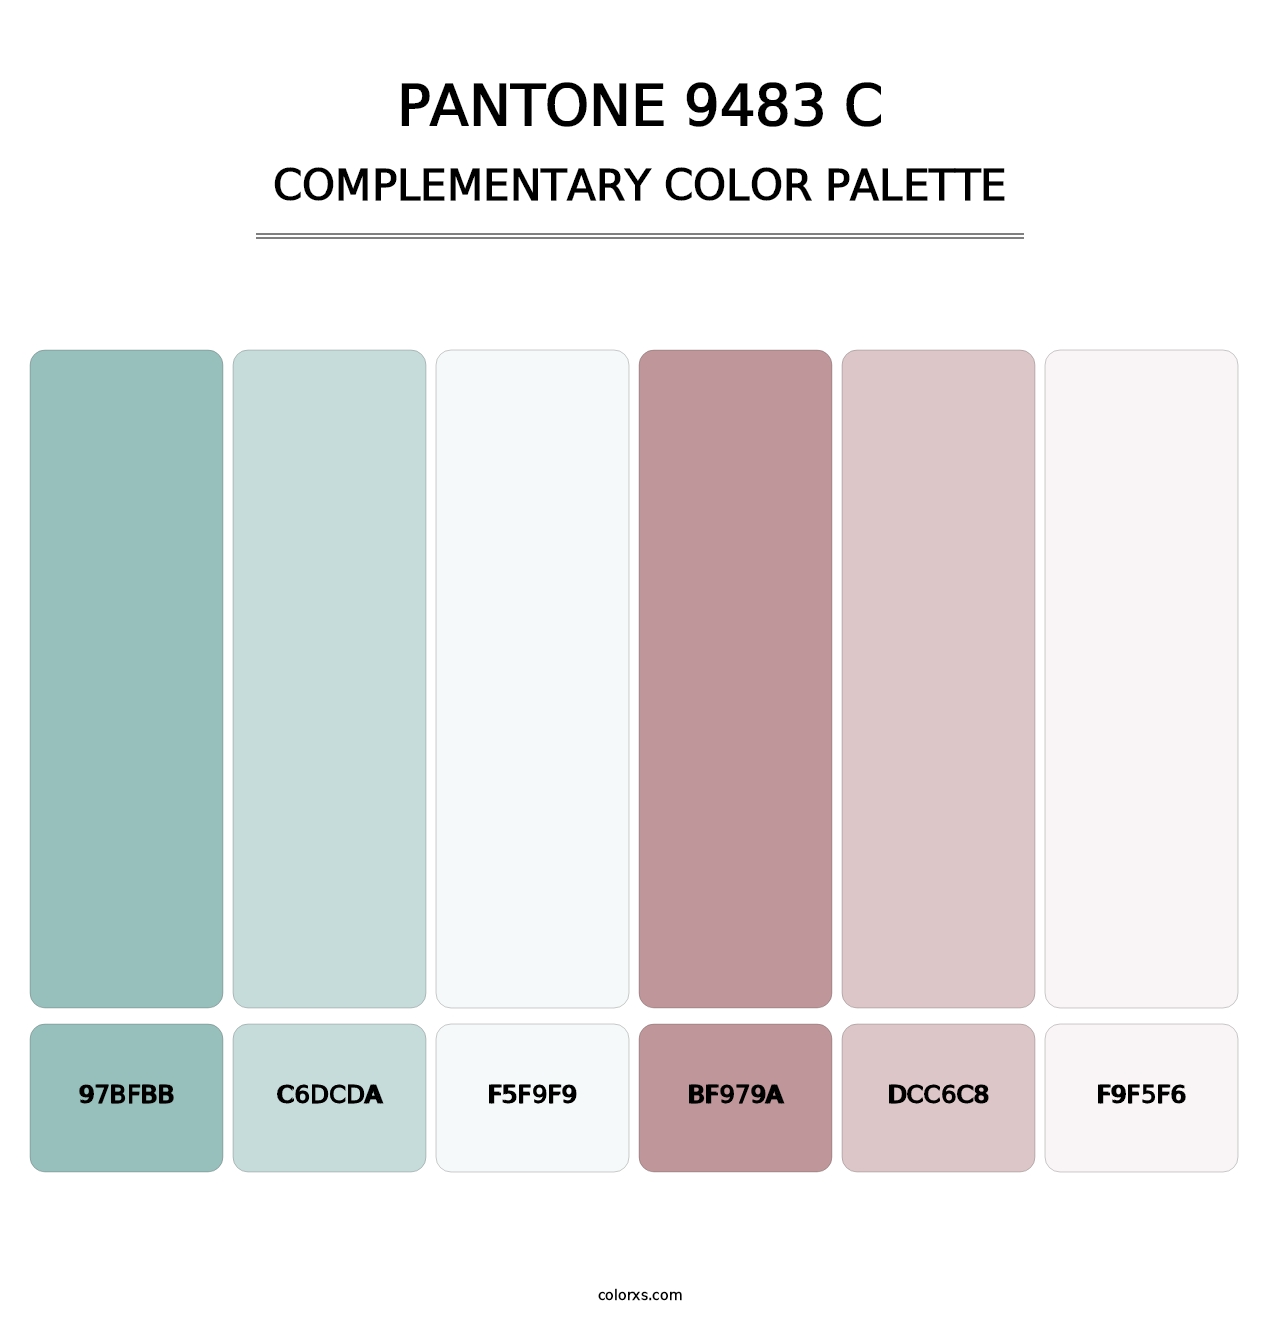 PANTONE 9483 C - Complementary Color Palette